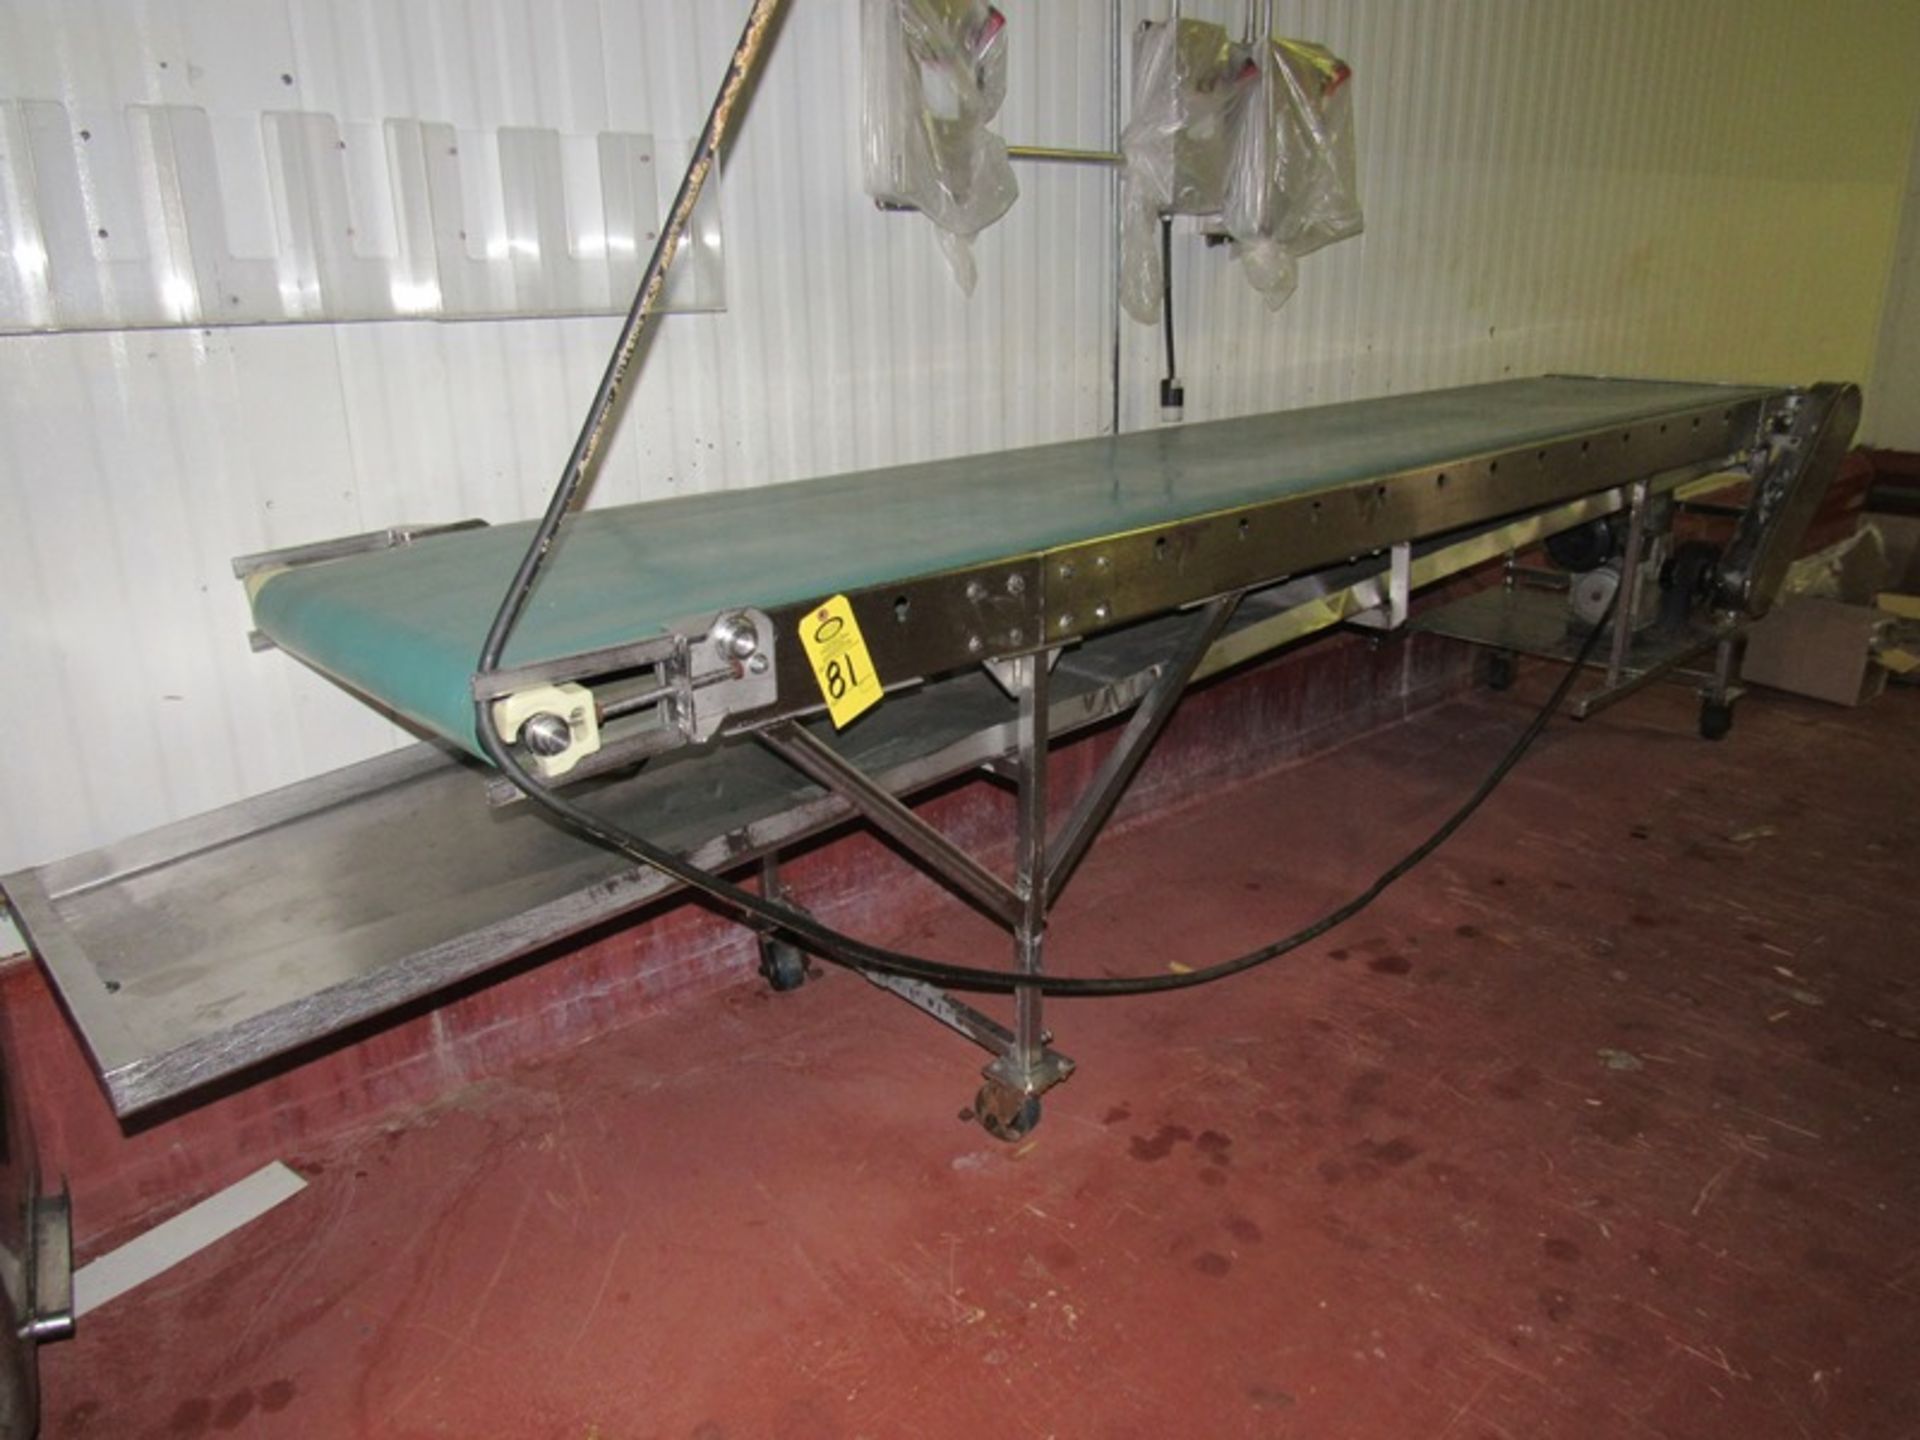 Portable Stainless Steel Conveyor, 28" W X 151" L neoprene belt, Vari Drive on 3 phase motor (